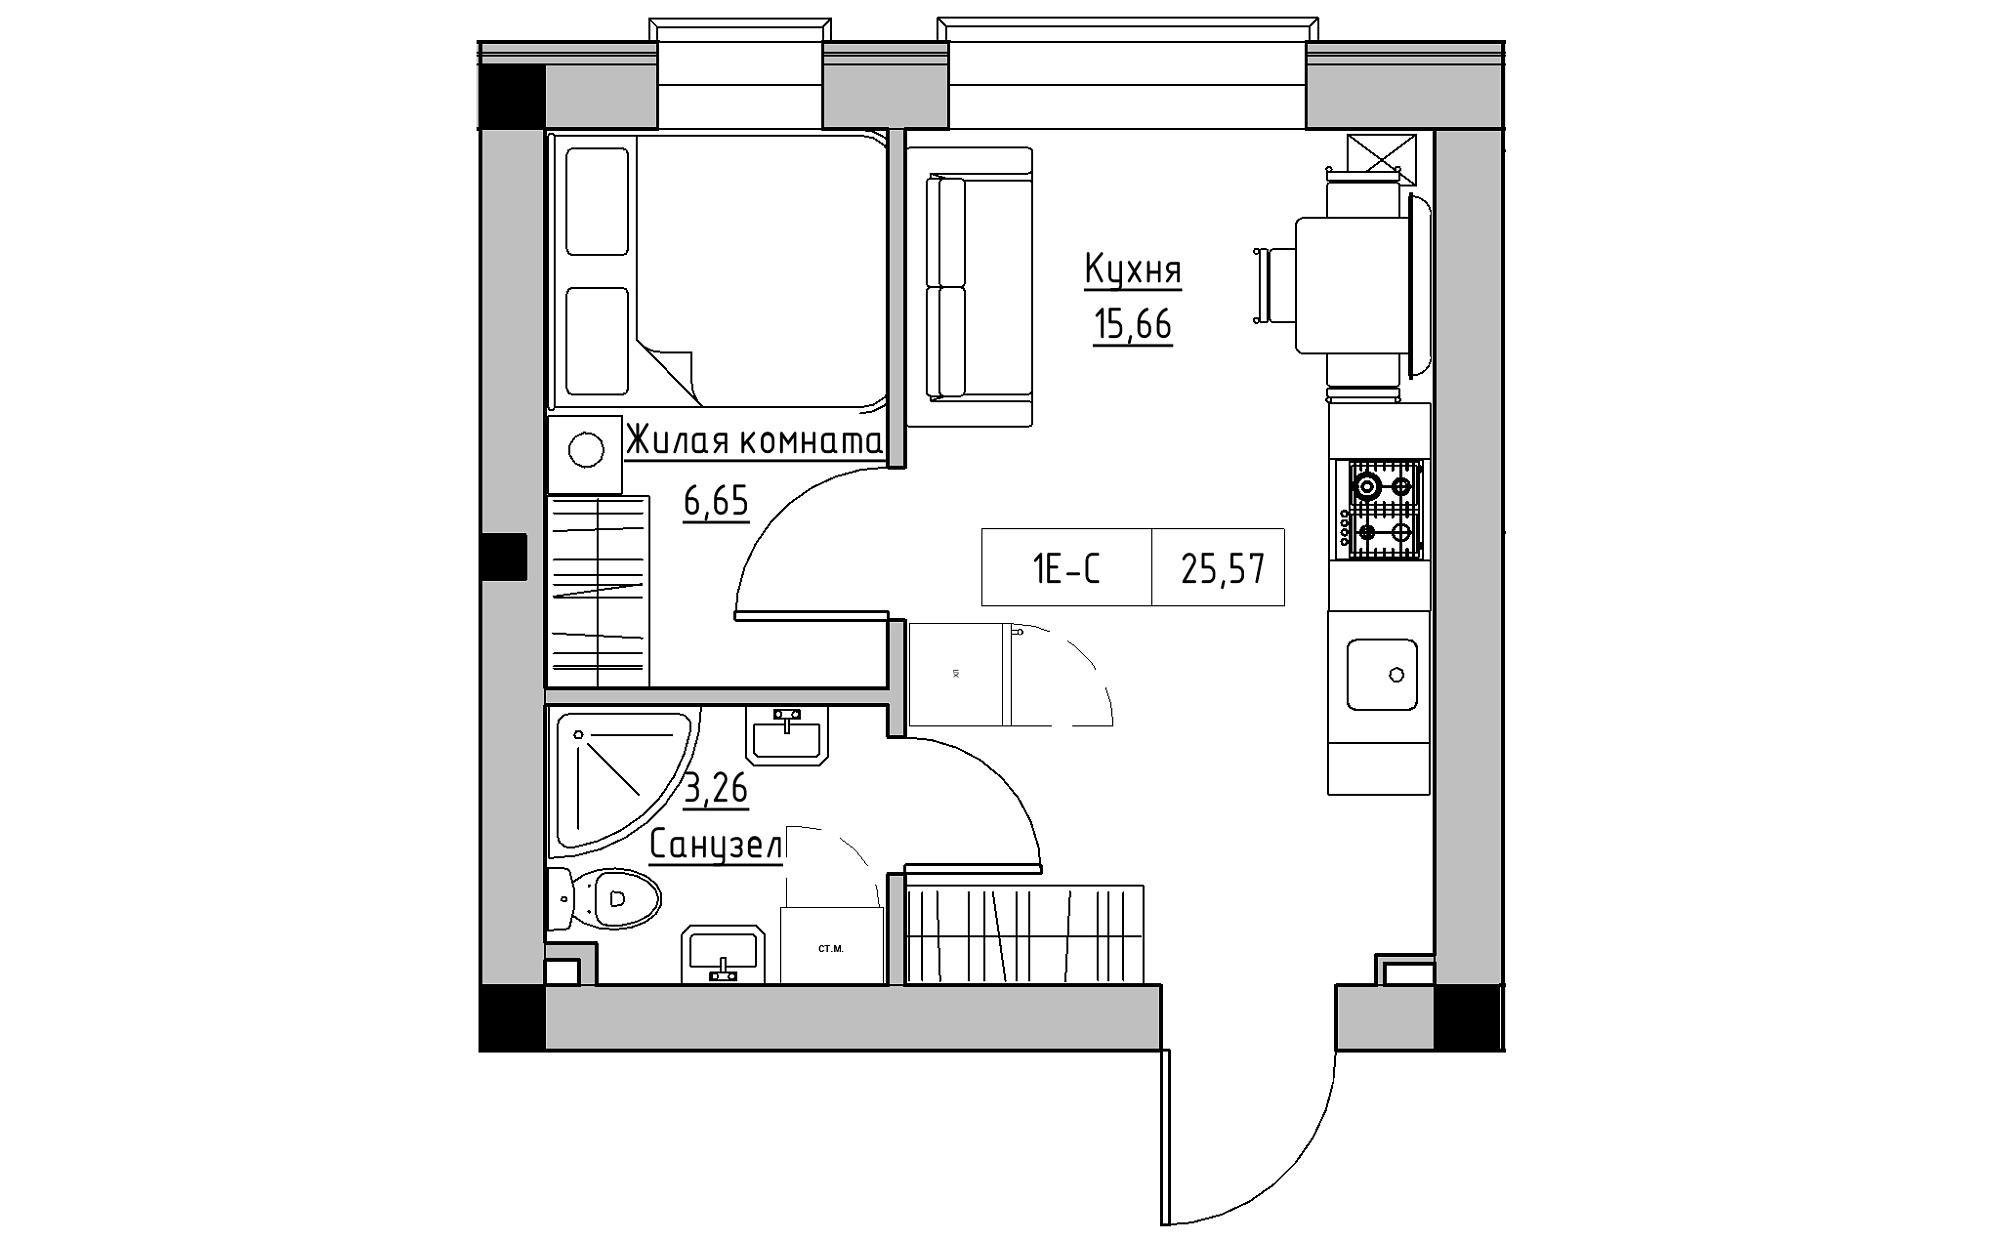 Planning 1-rm flats area 25.57m2, KS-022-05/0004.